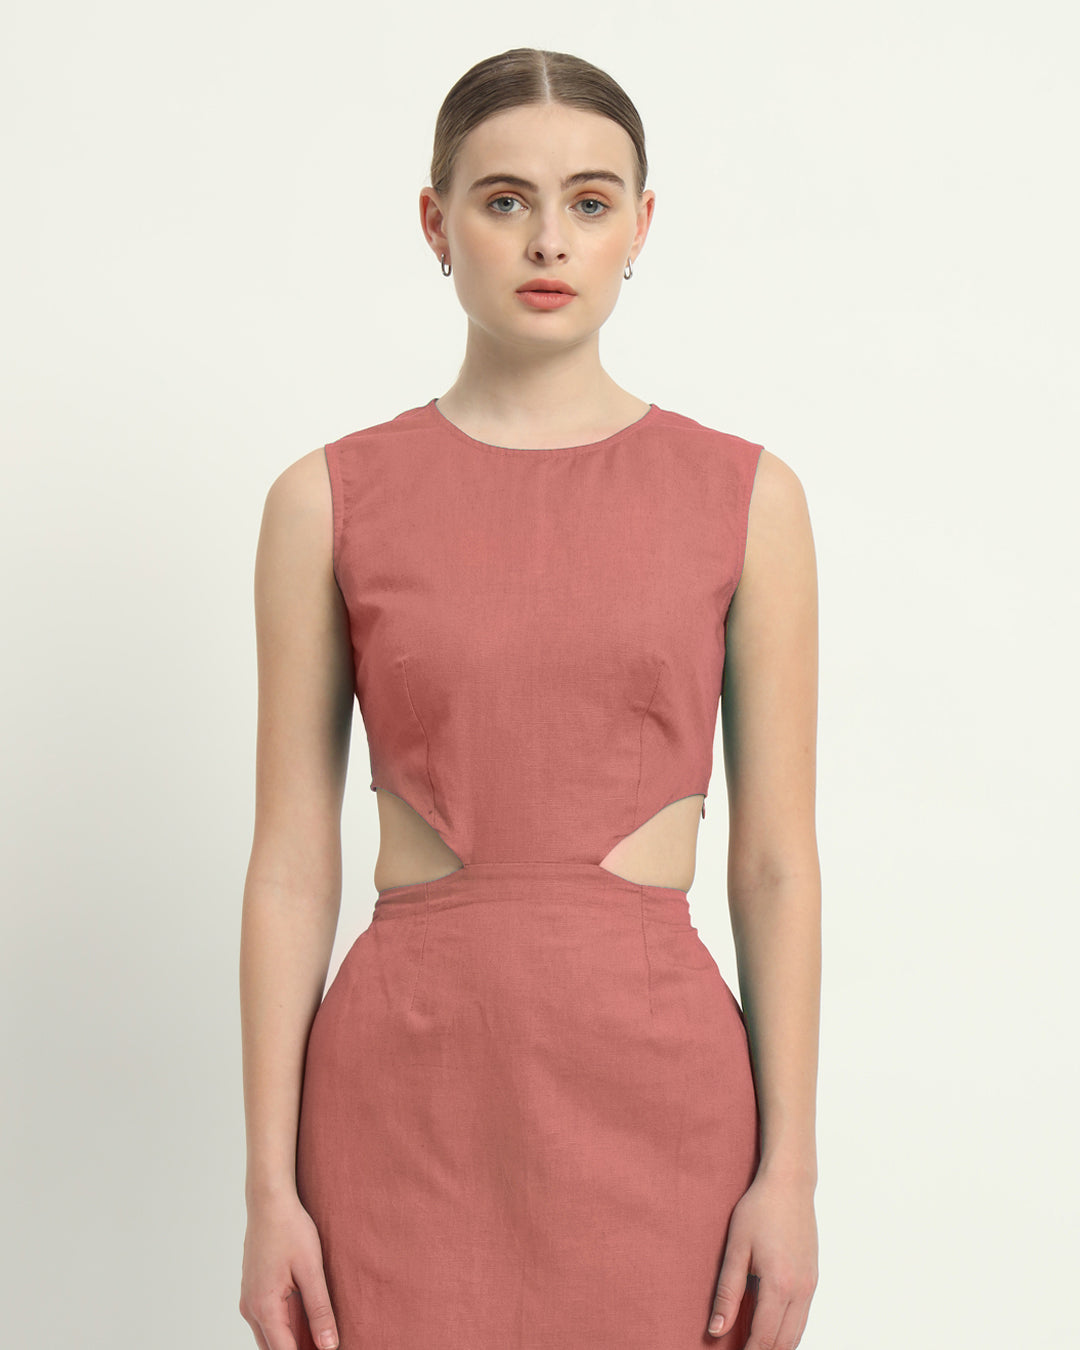 The Ivory Pink Livingston Cotton Dress